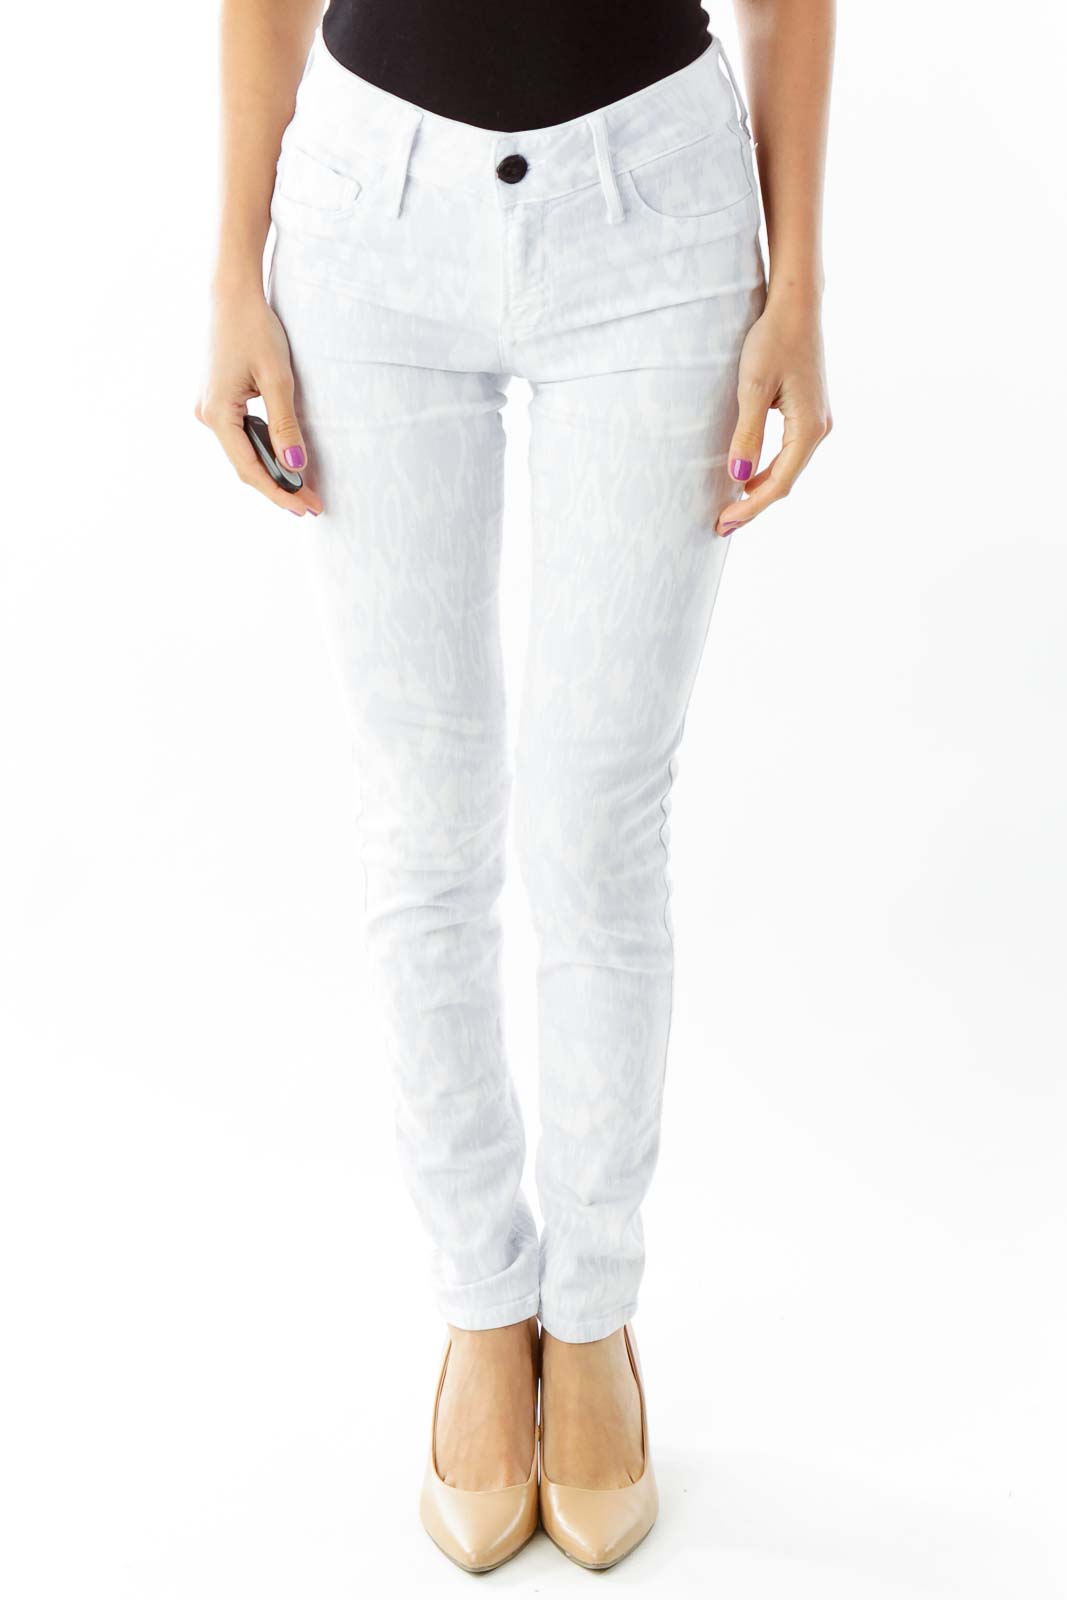 Gray Cream Print Skinny Jeans Front